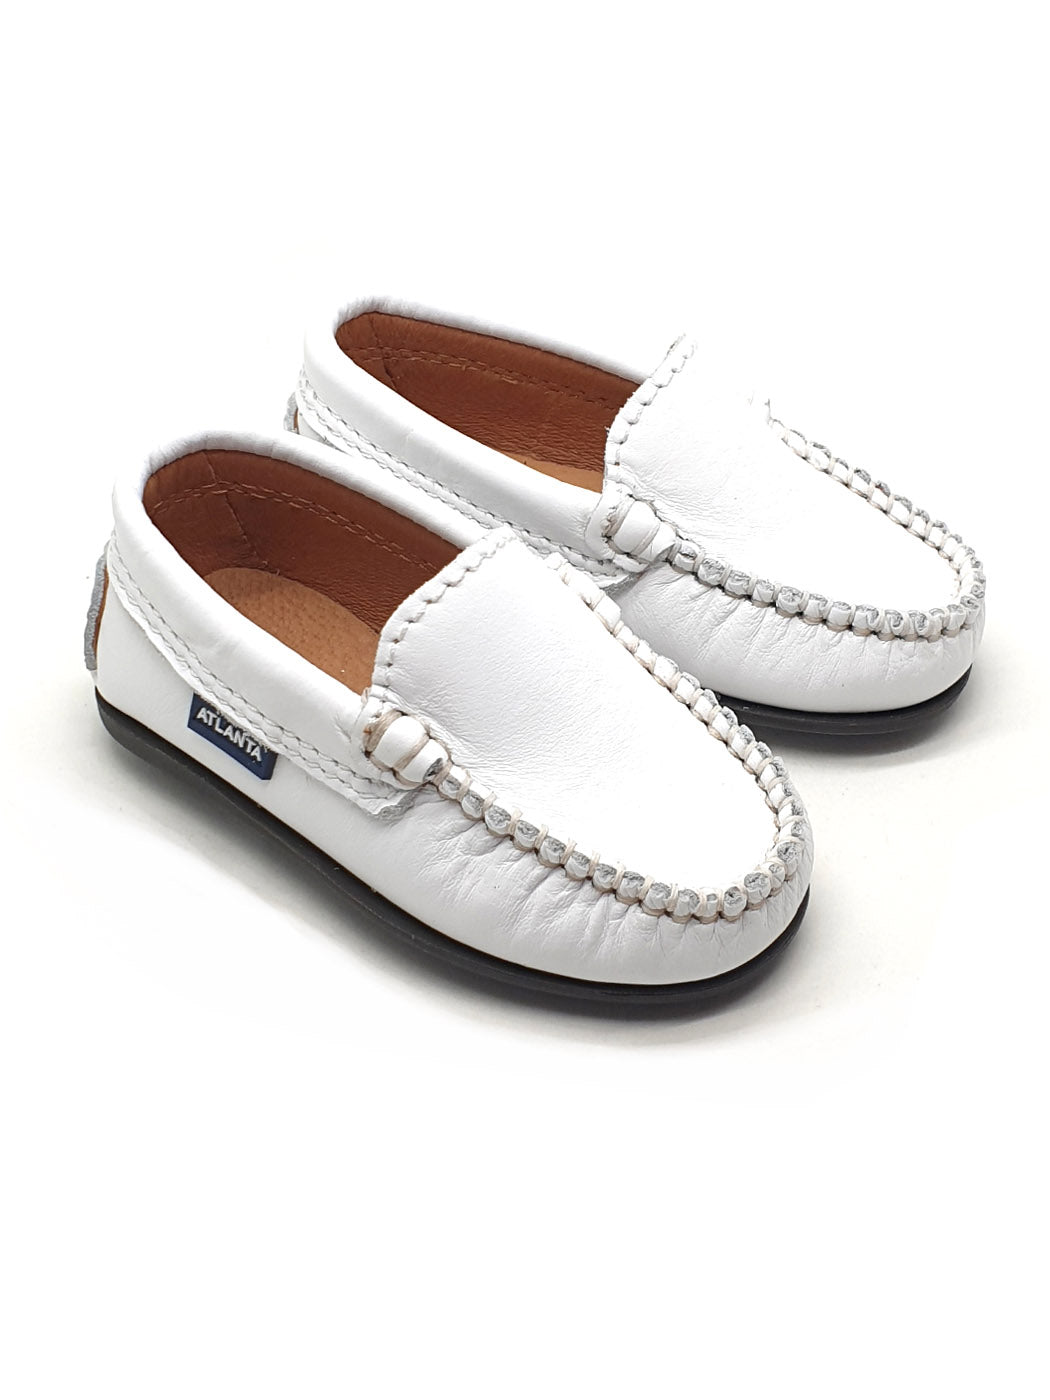 Atlanta Mocassin- Baby Shoes Moccasins white- 15G152